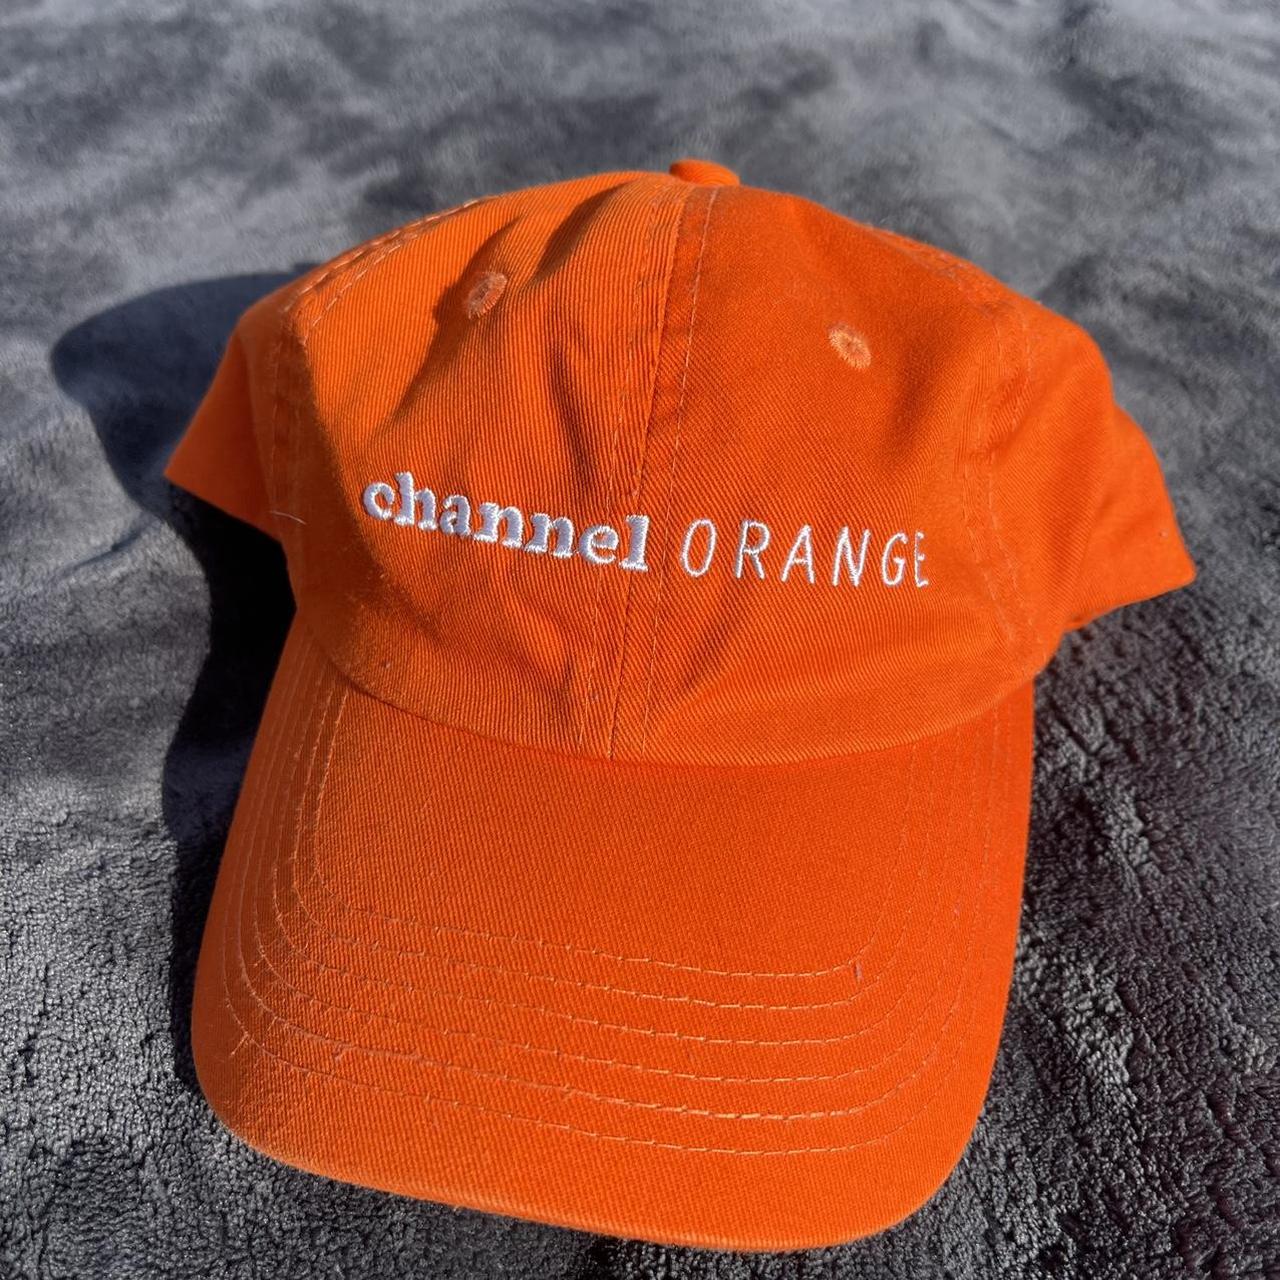 Chanel hat - Depop